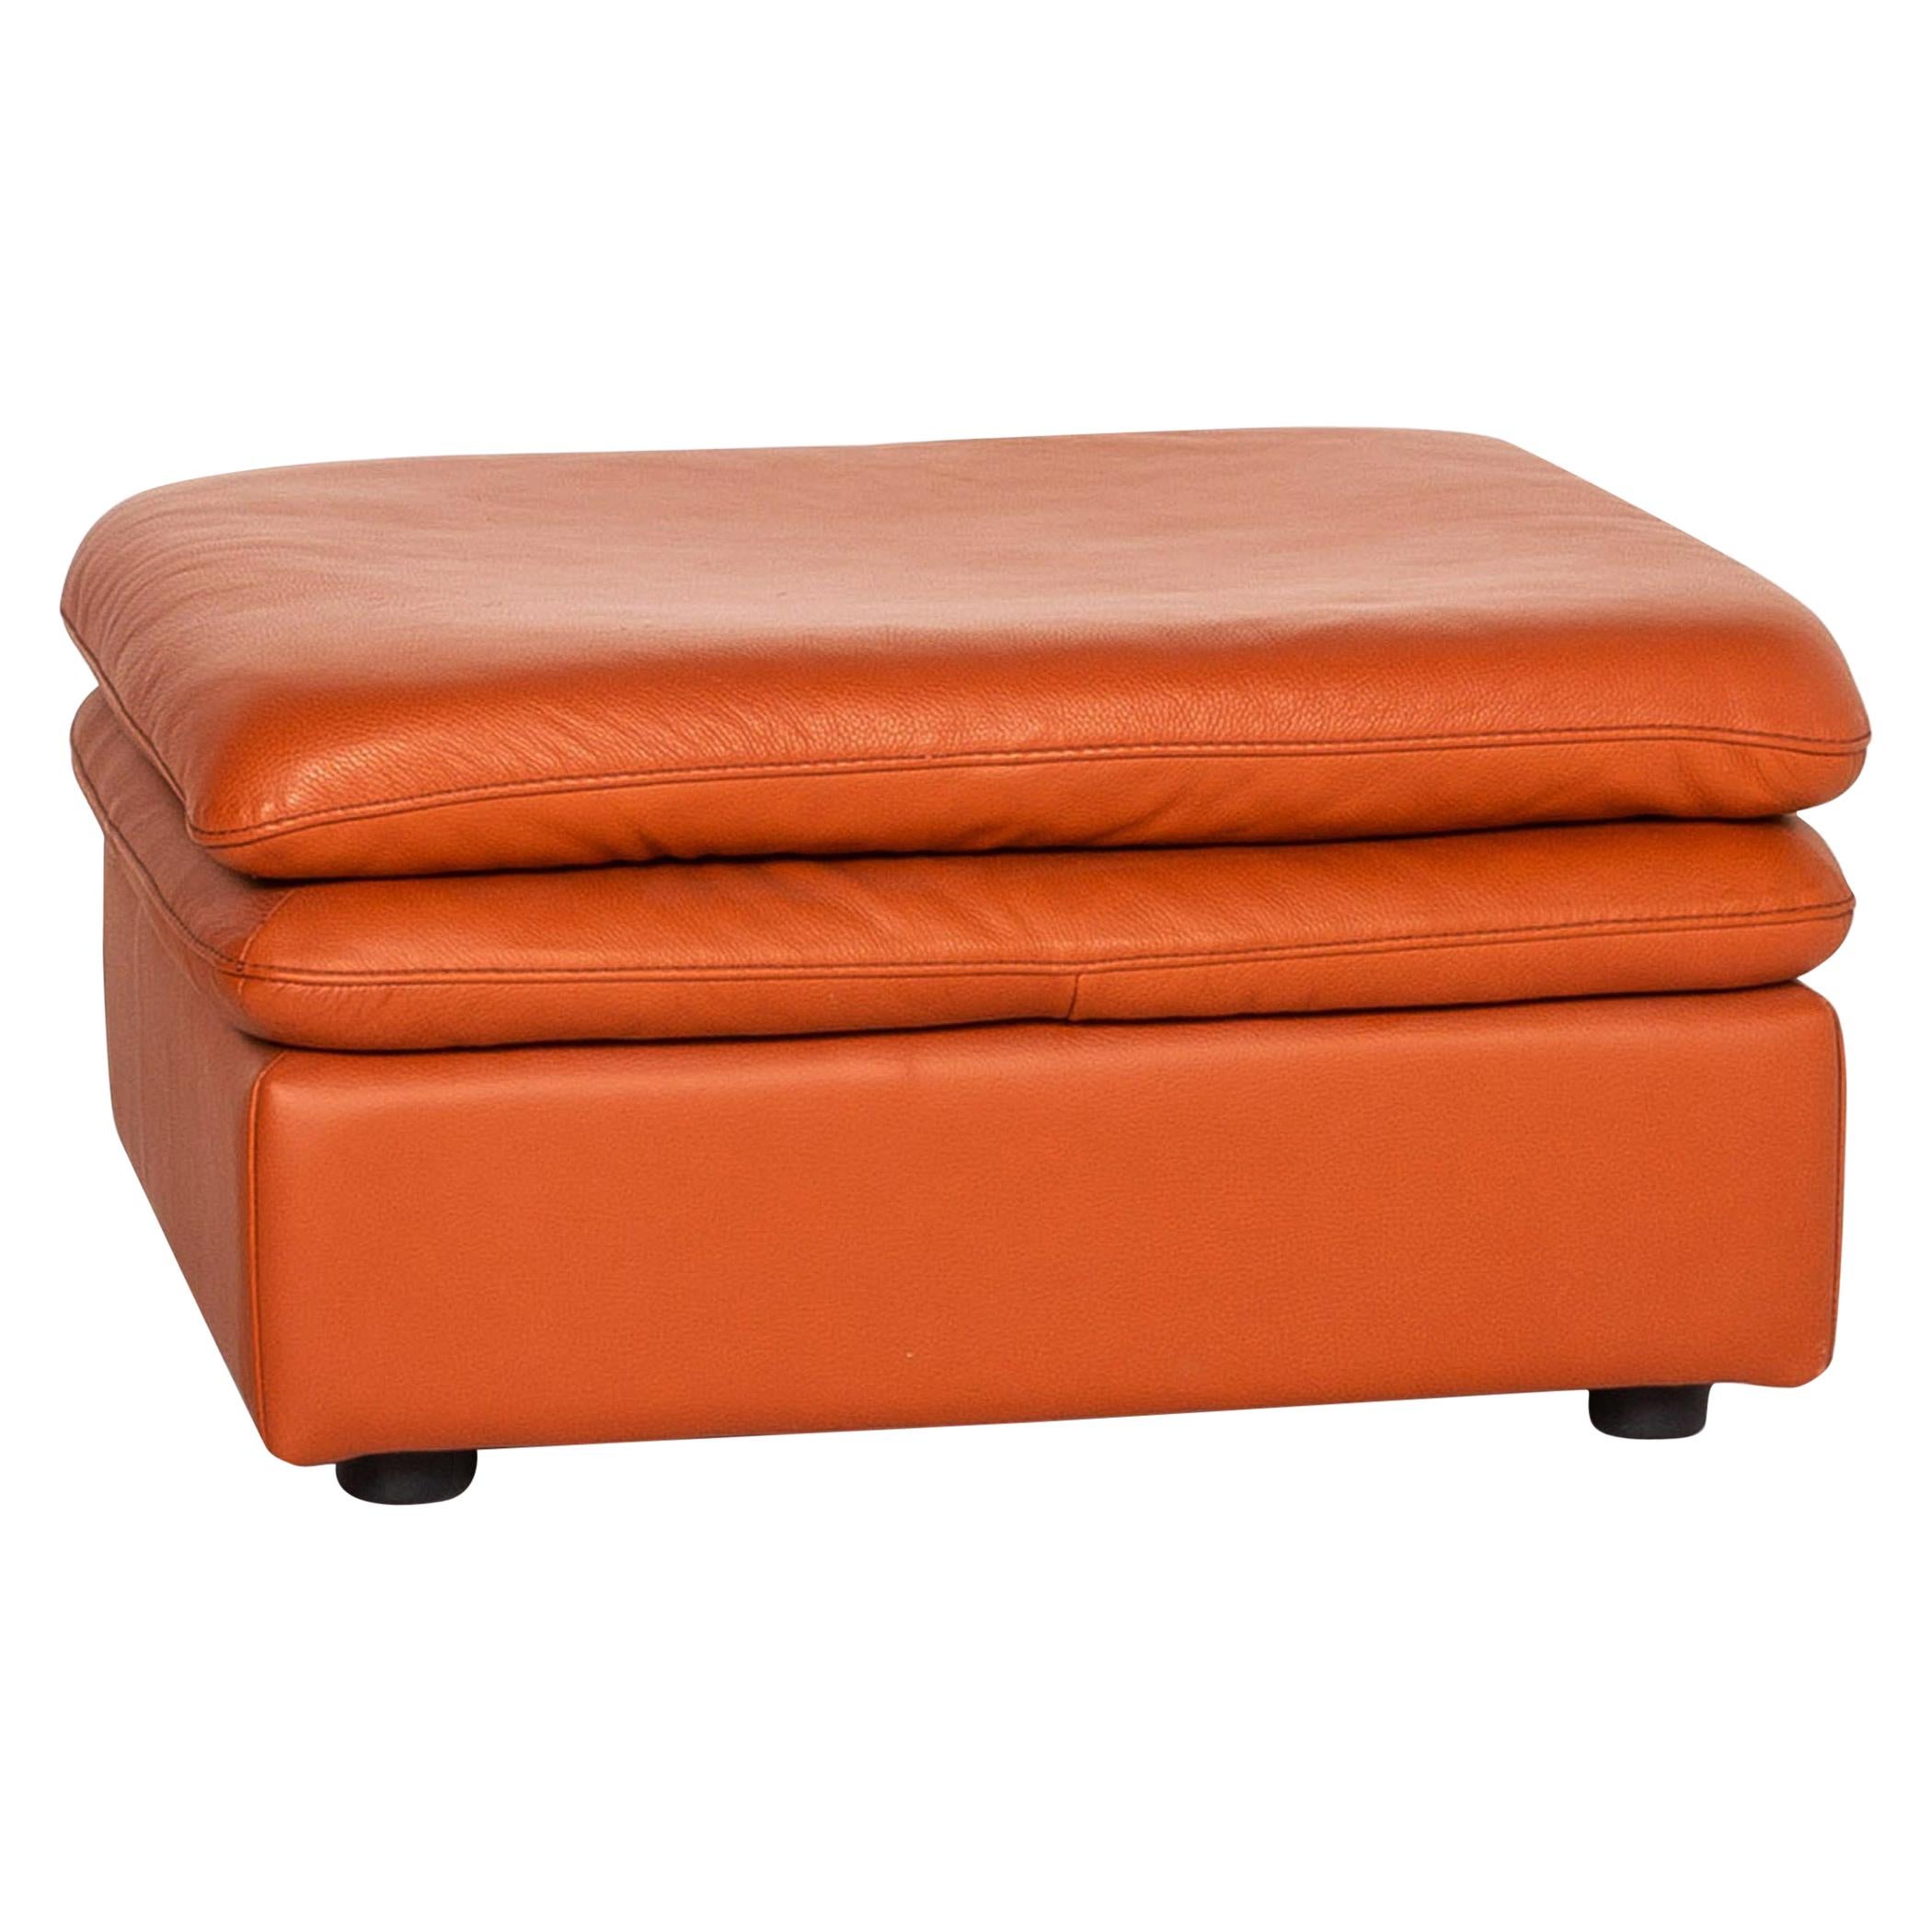 Natuzzi Leather Stool Terracotta Orange Ottoman For Sale